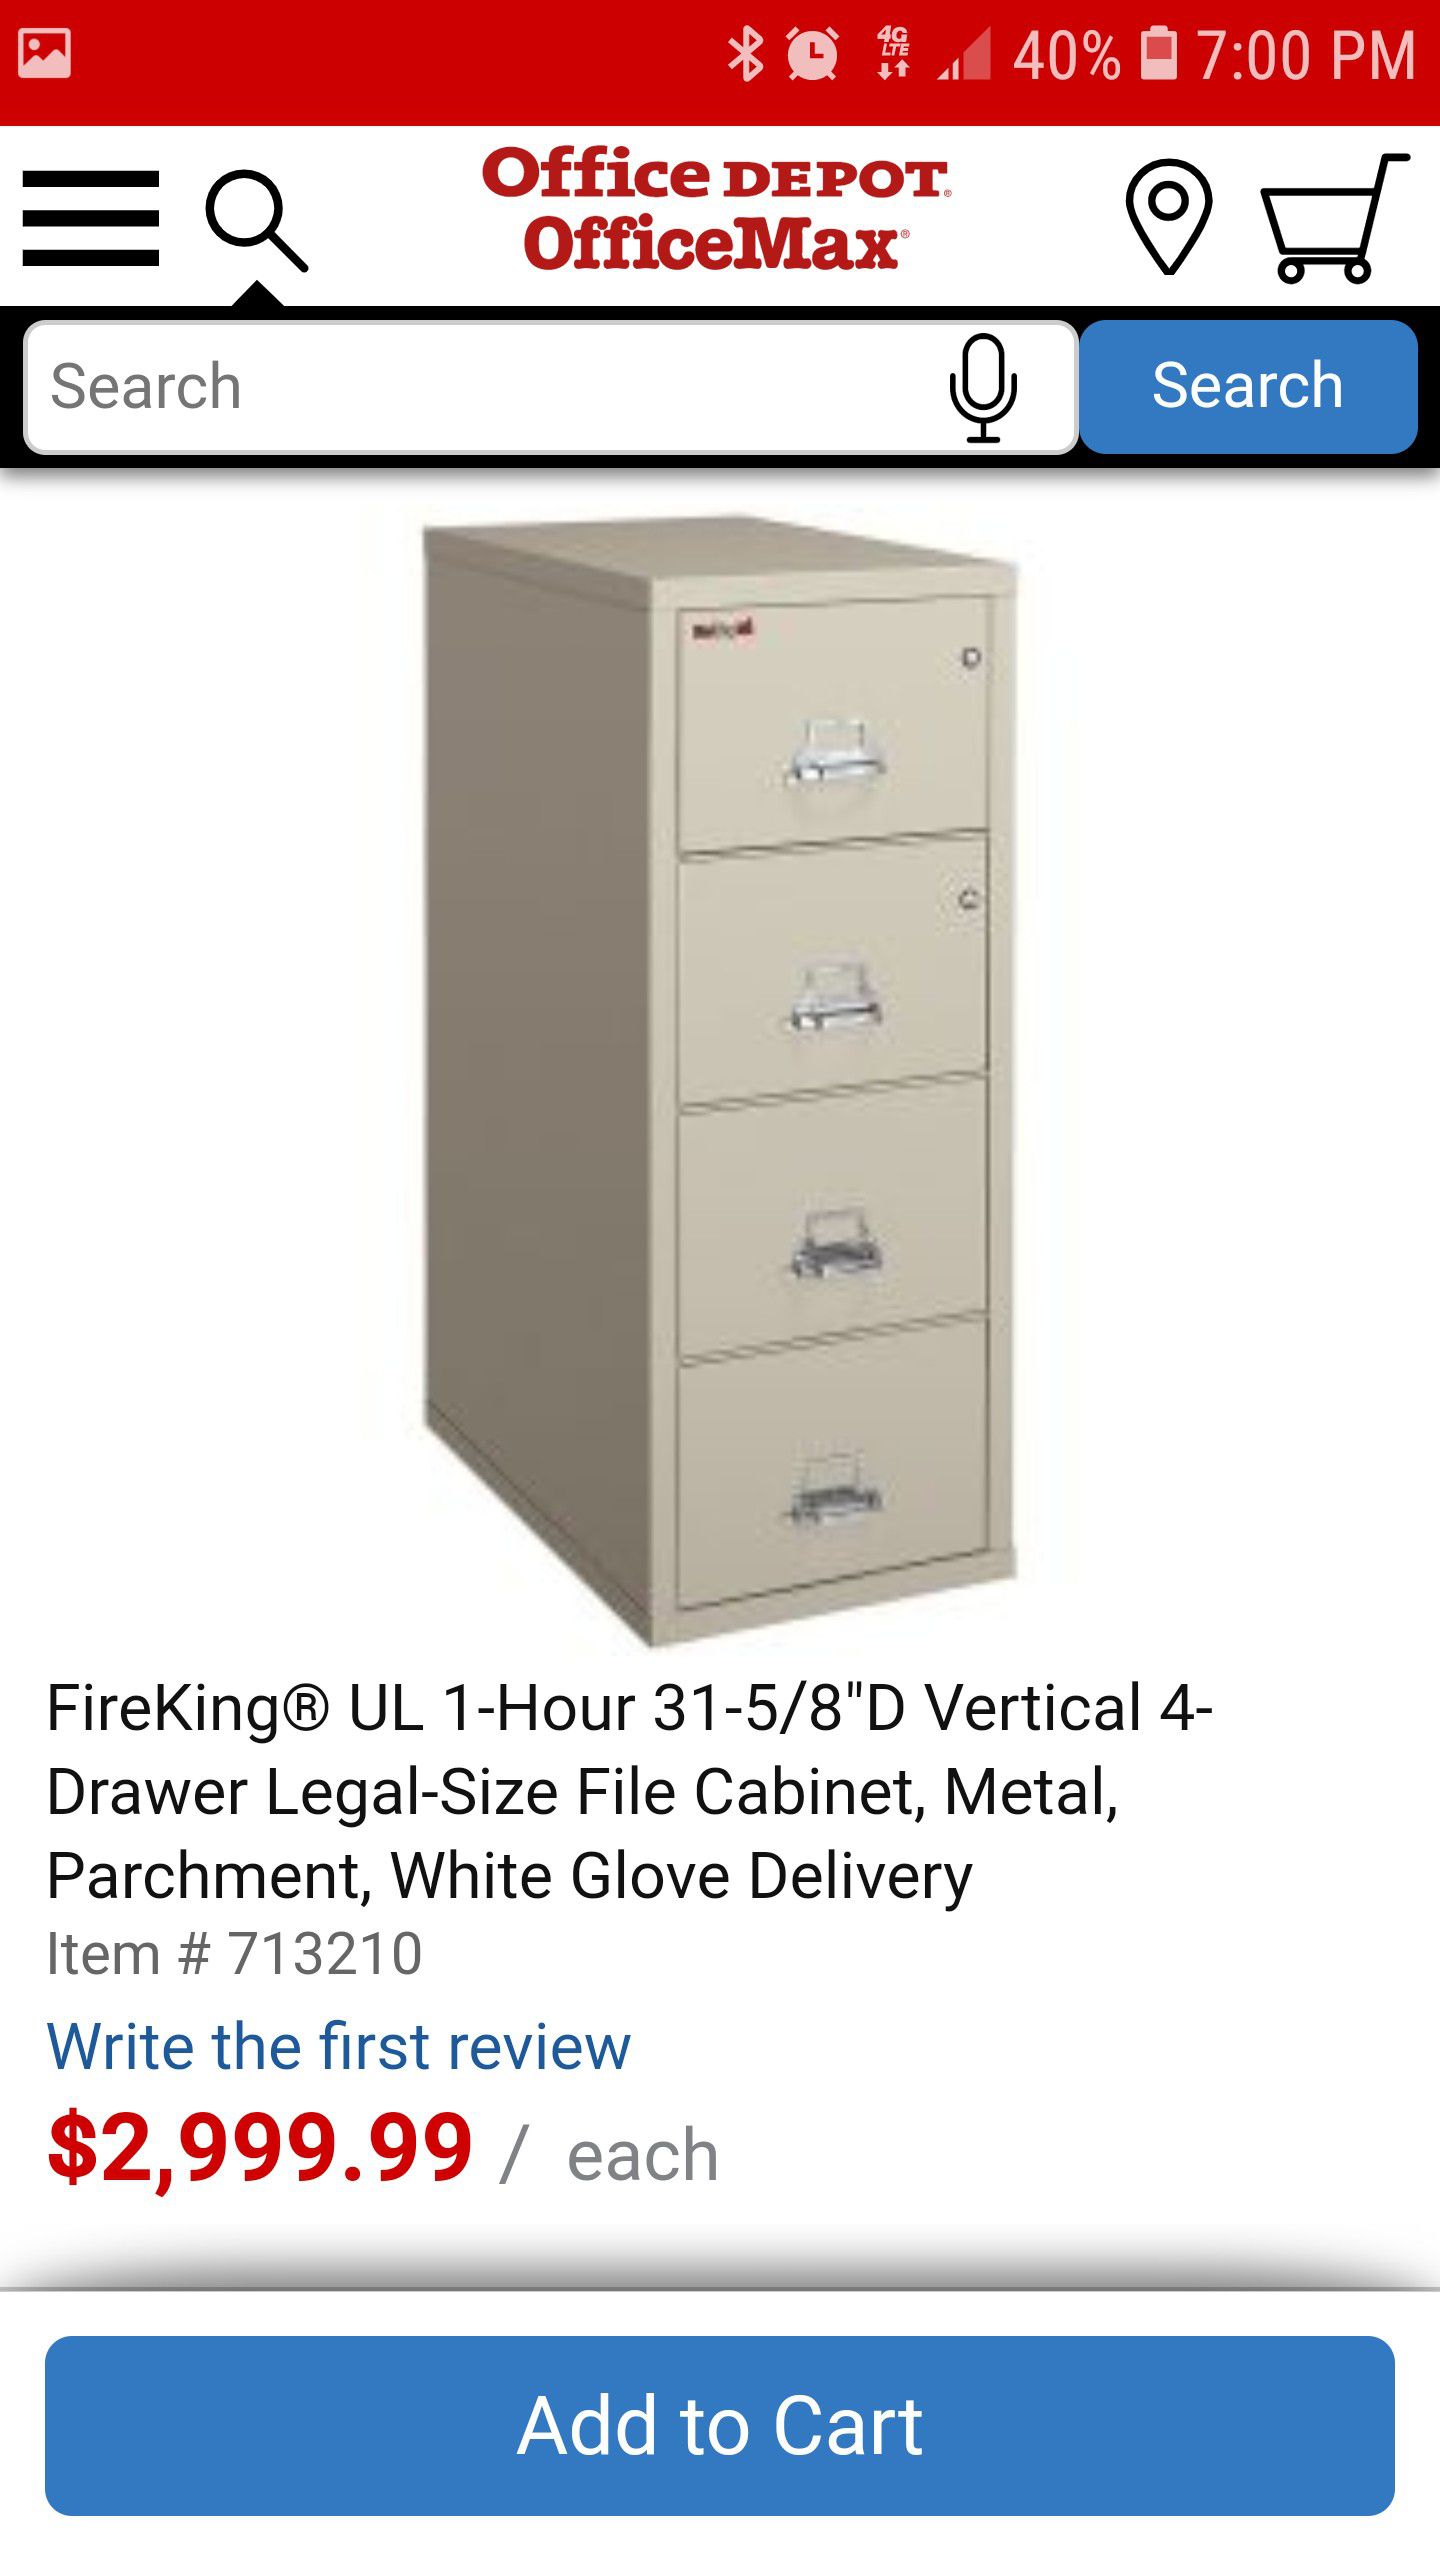 Fire king fireproof file cabinet vault